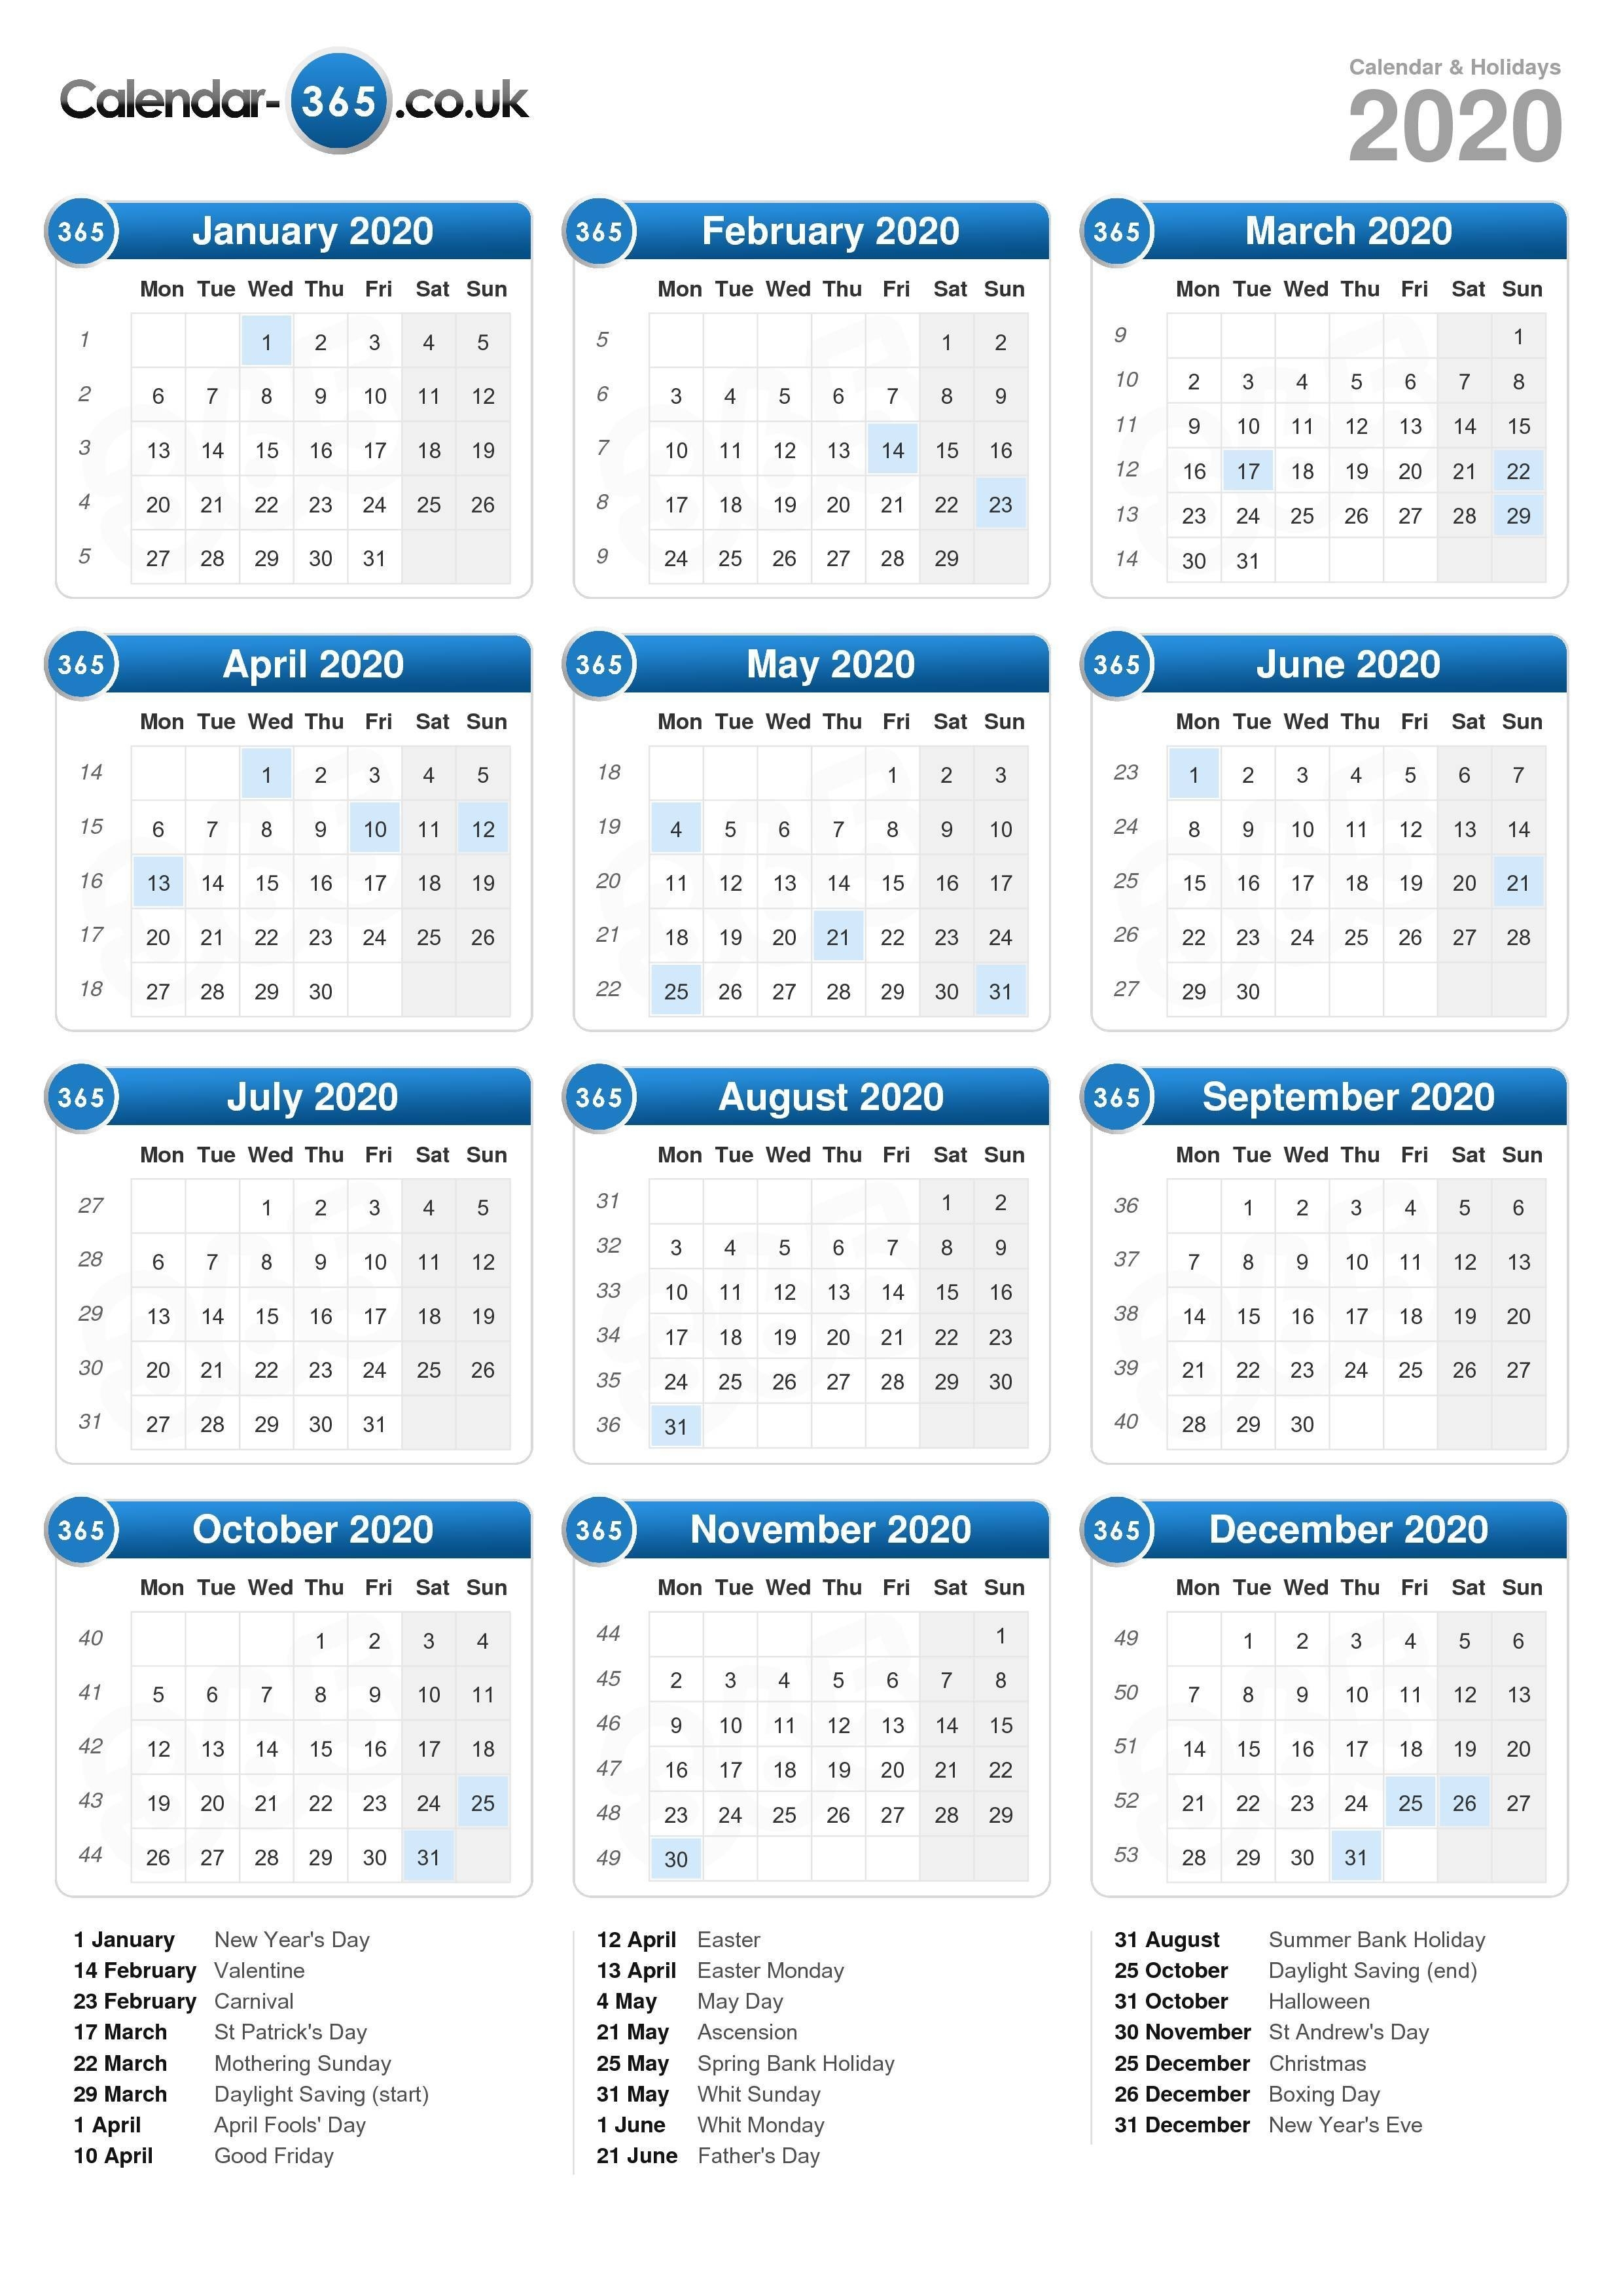 Calendar 2020-Calendar 2020 Printable With Bank Holidays